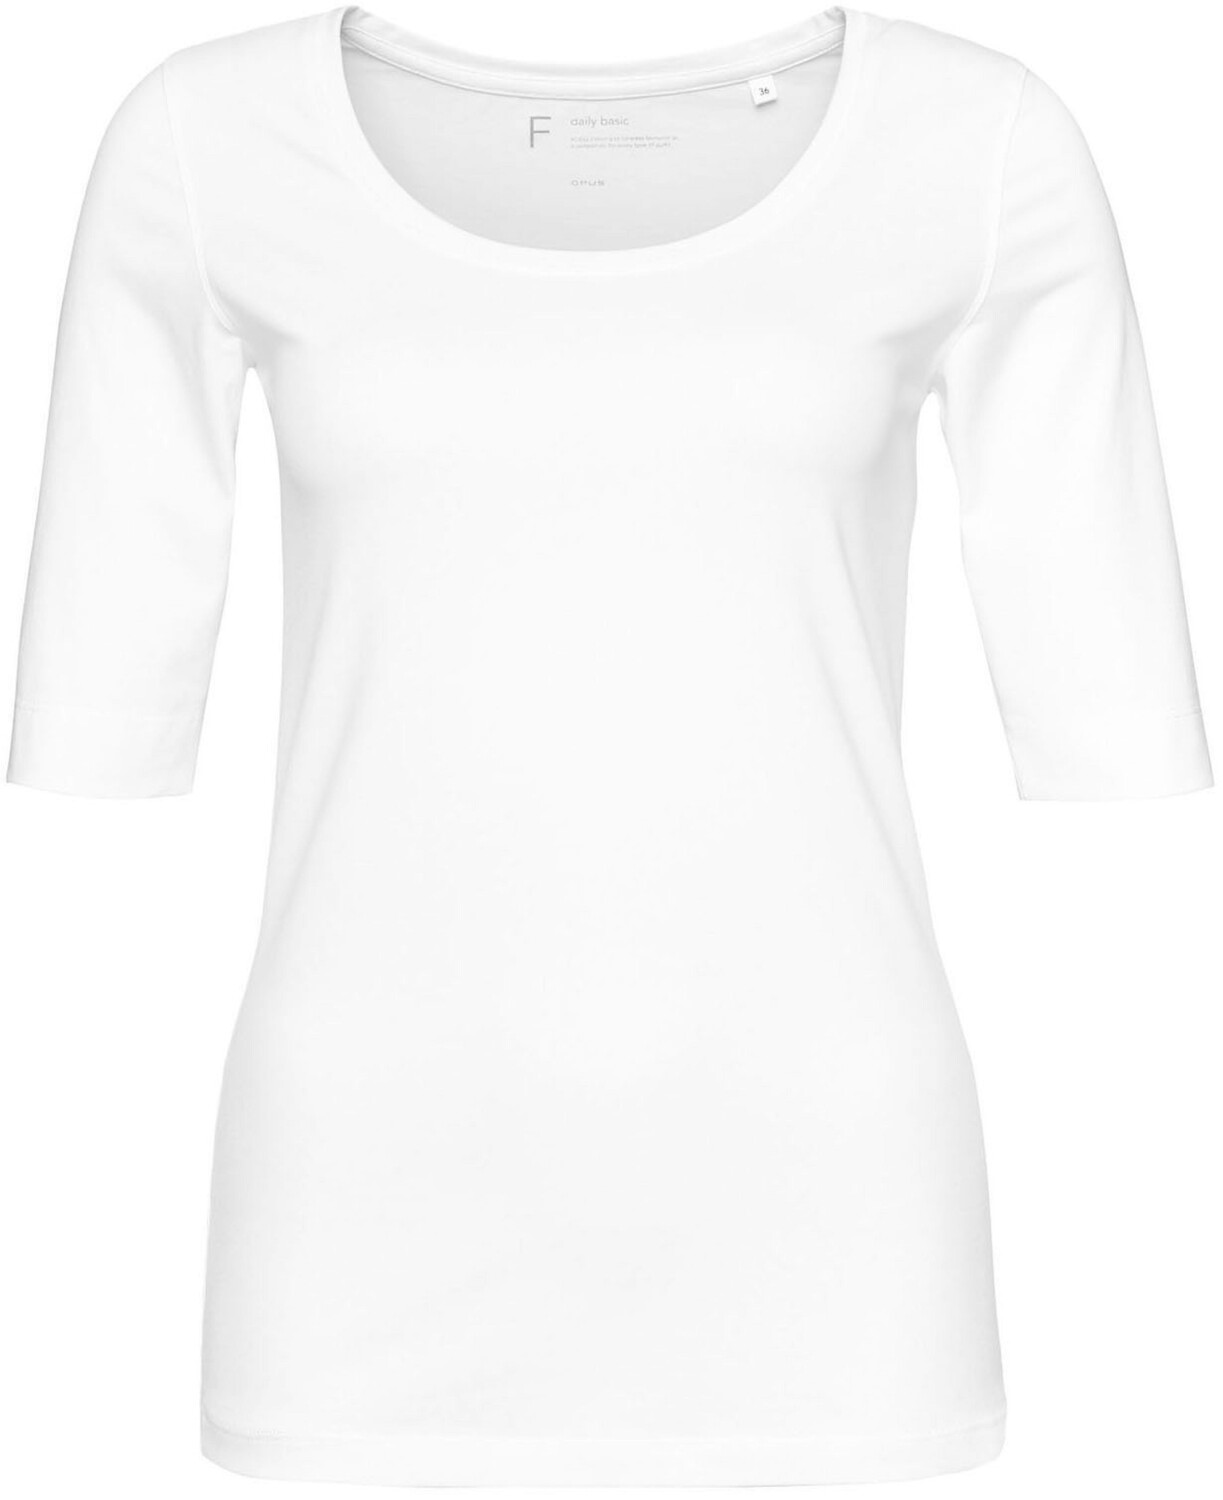 Opus Sanika Shirt ab 17,95 € | Preisvergleich bei